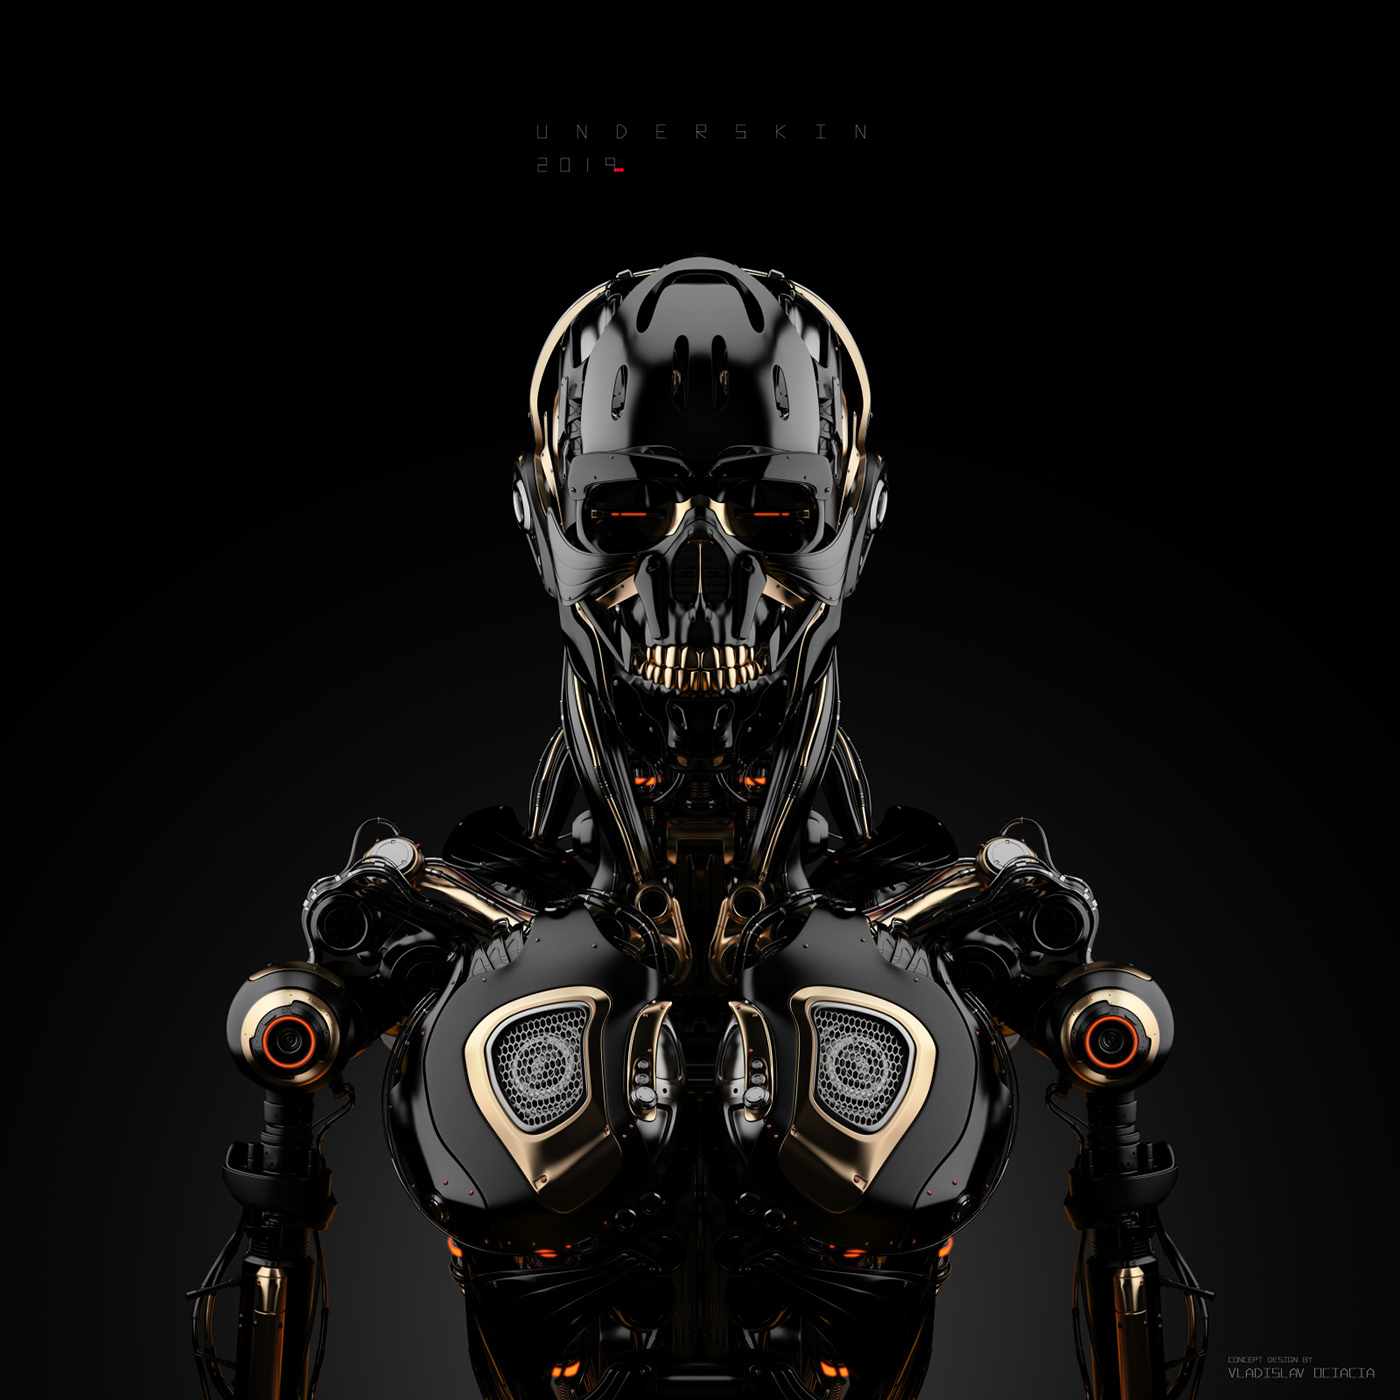 robotic robot Cyborg steel skull body sci-fi mechanical futuristic under